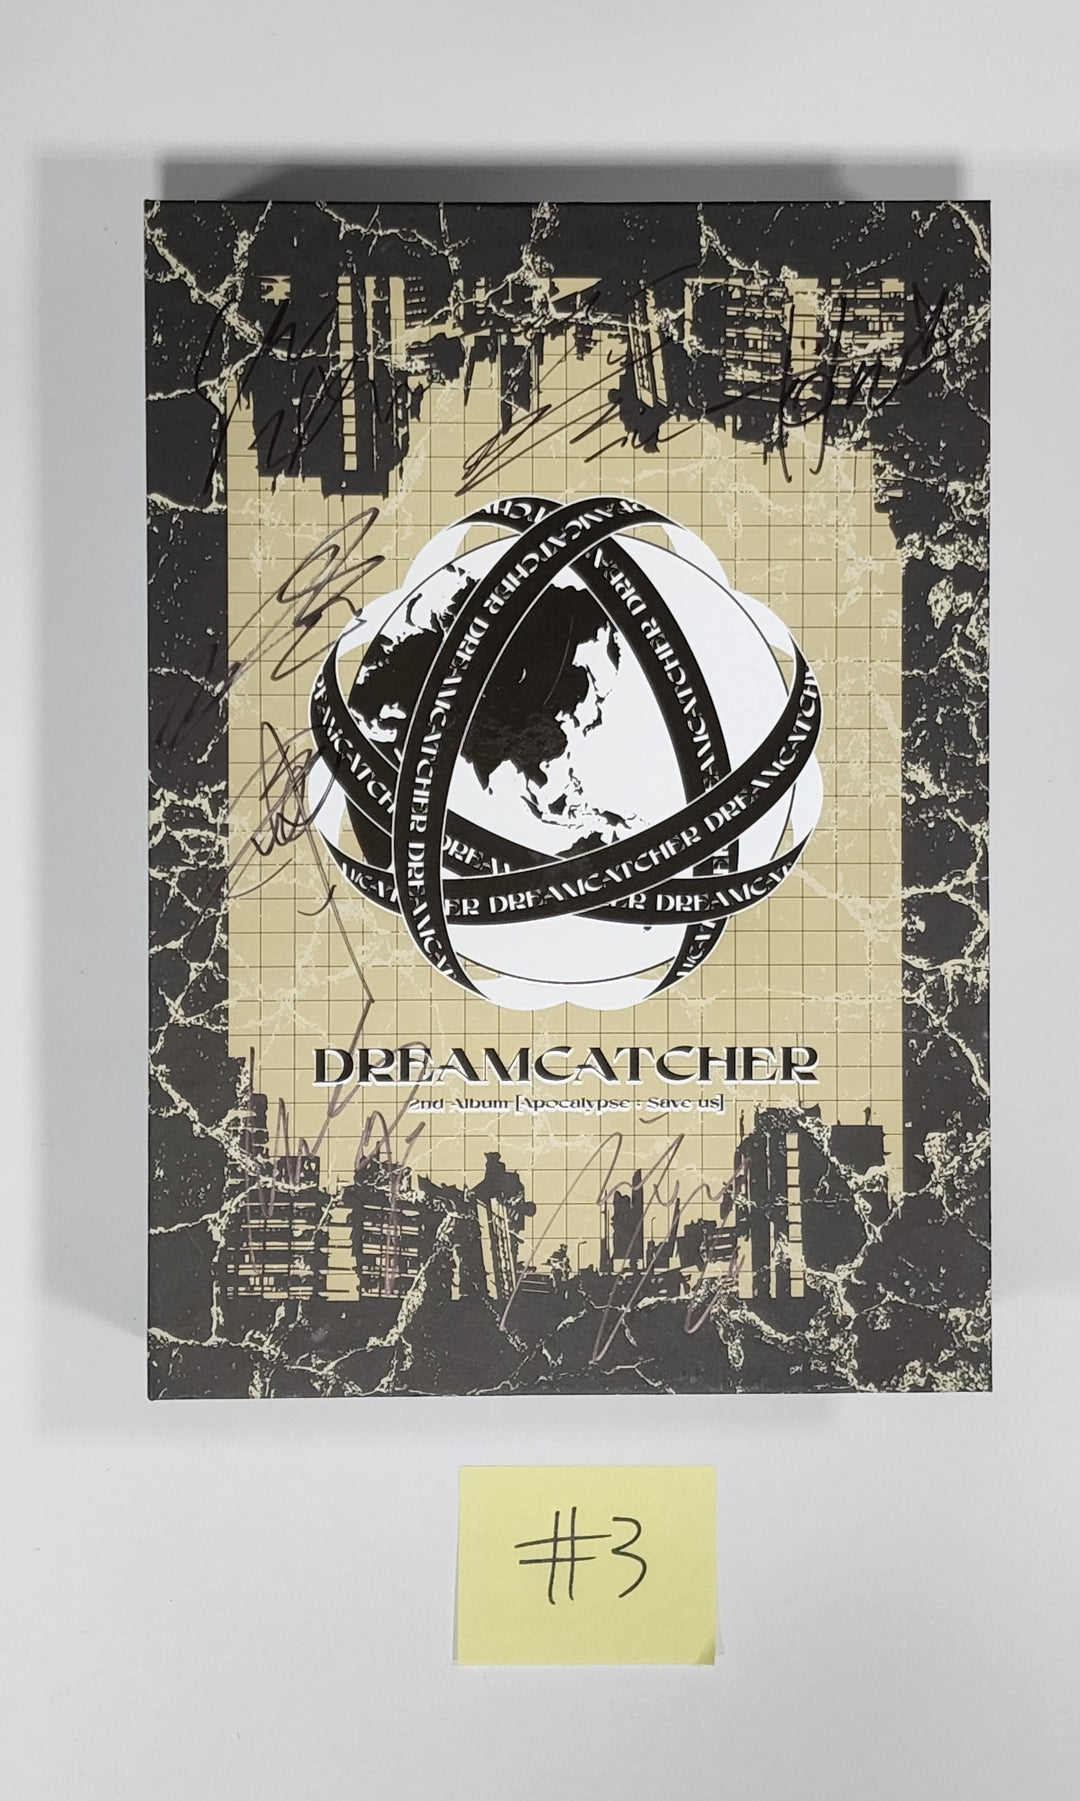 Dreamcatcher 'Apocalypse : Save us' - Limited Edition Hand Autographed(Signed) Promo Album